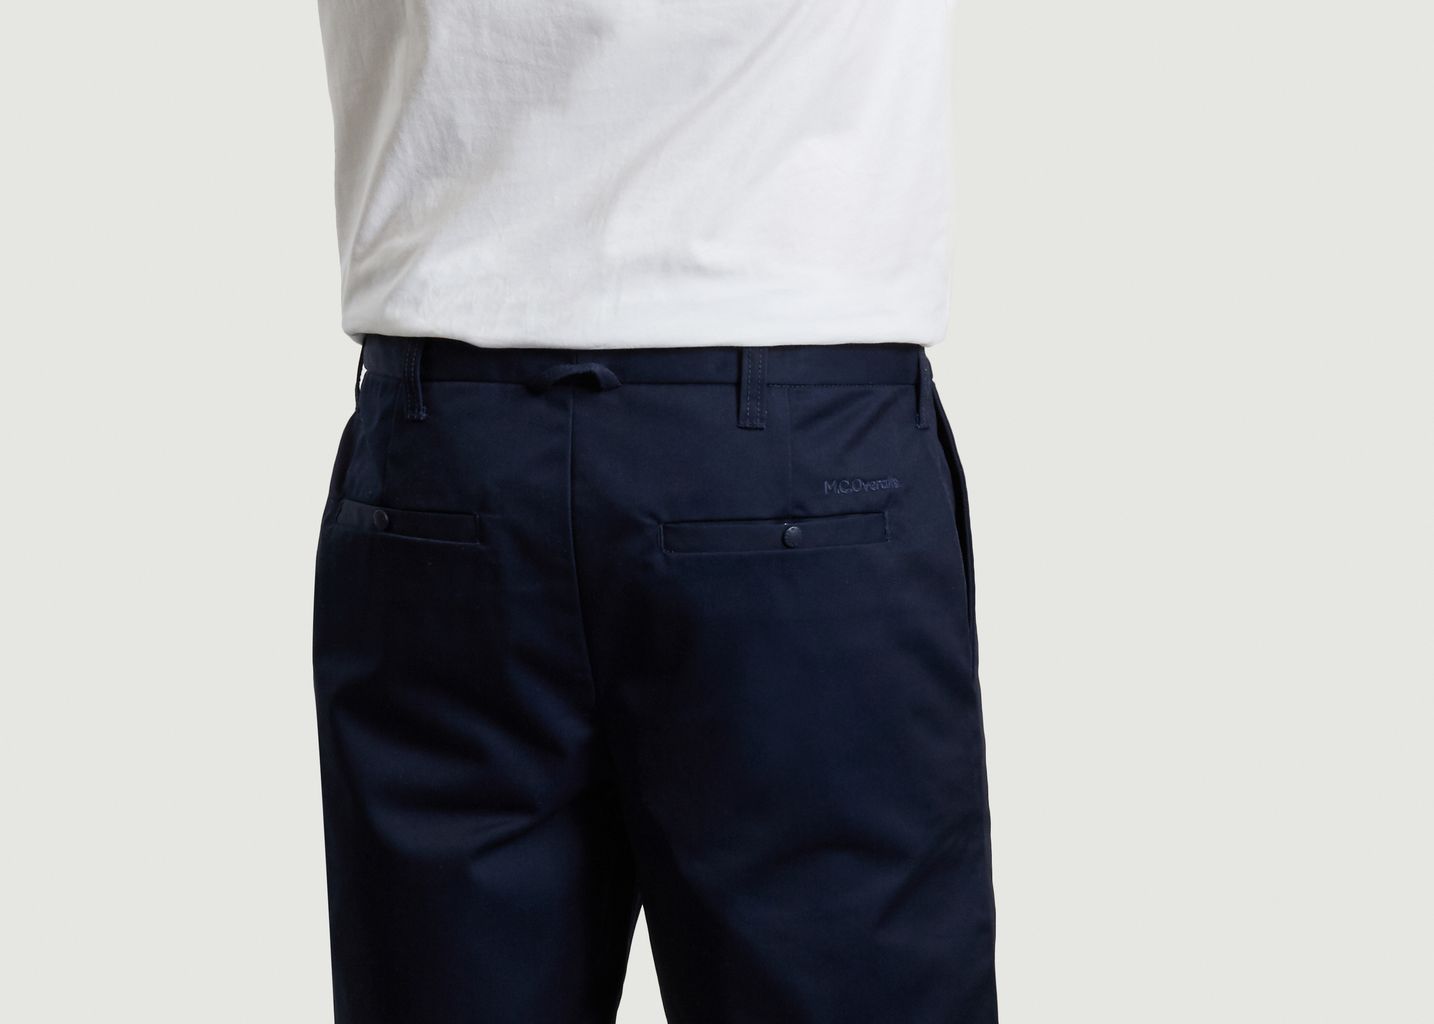 Plain straight cut shorts - M.C. Overalls